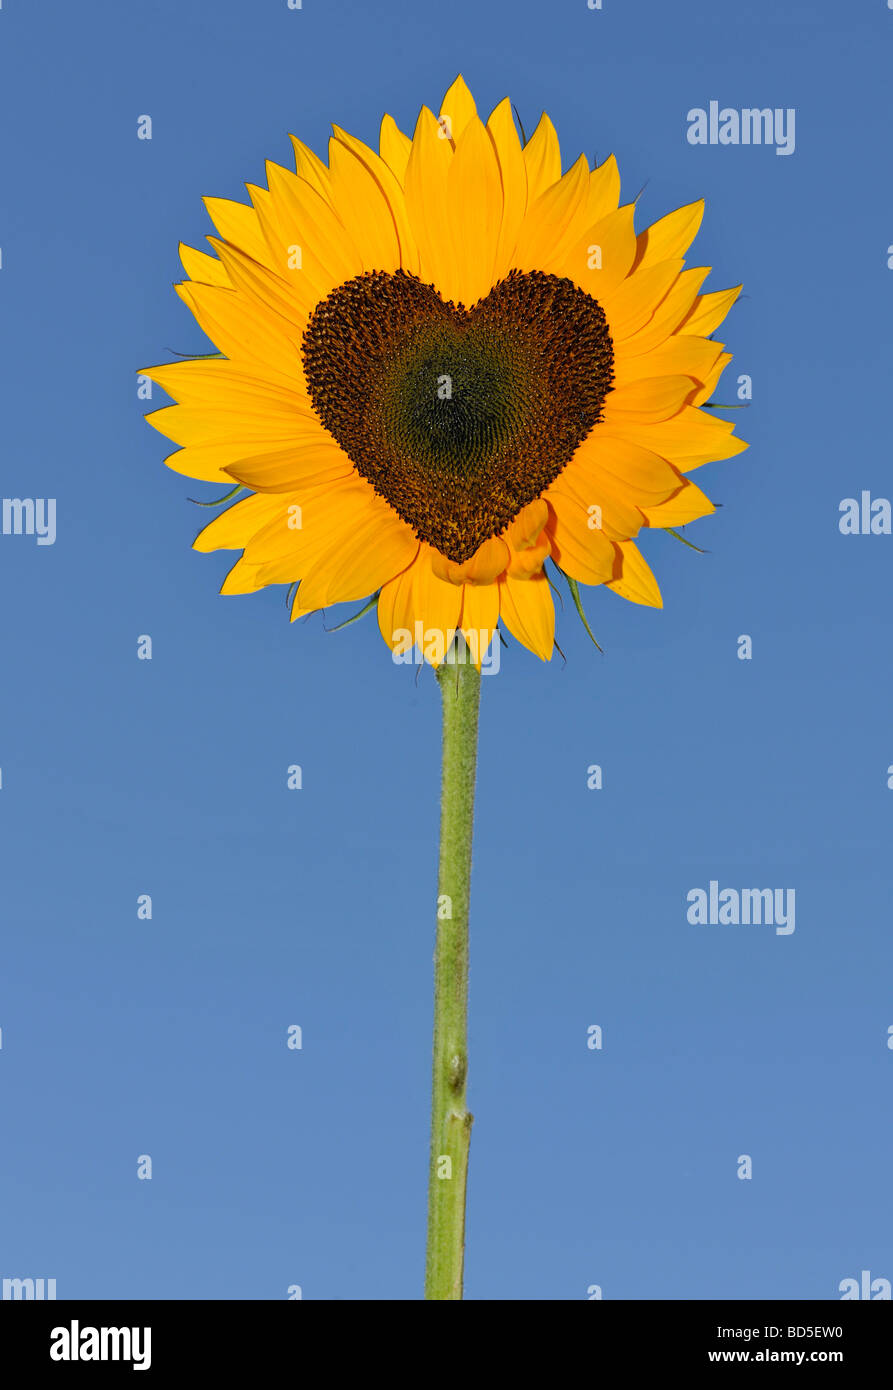 Sonnenblume (Helianthus Annuus) mit röhrenförmigen Blüten in Herzform Stockfoto